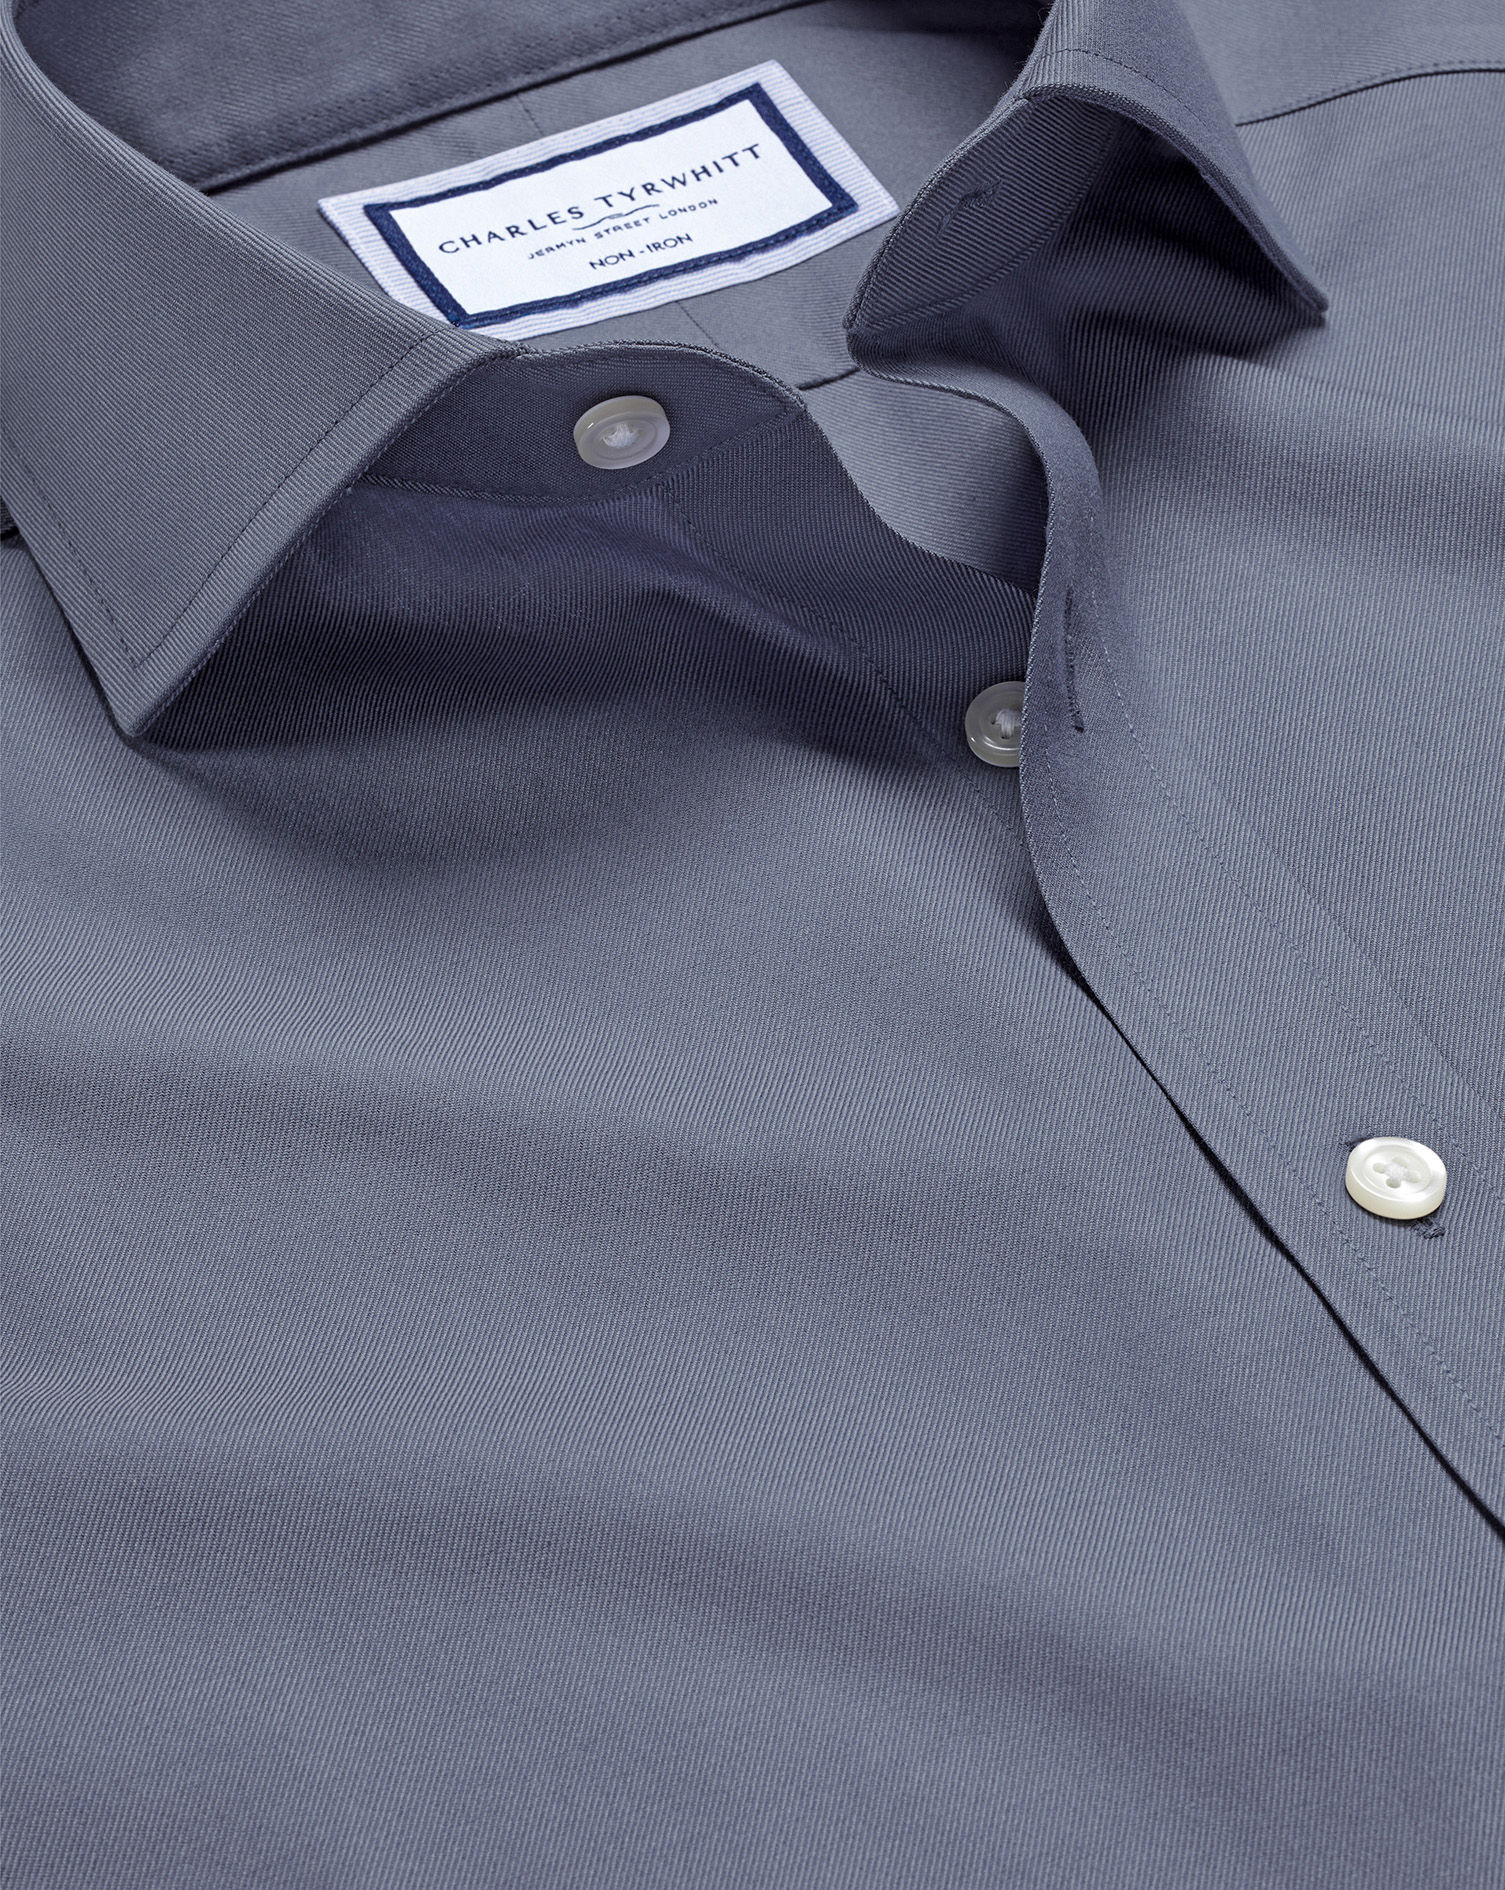 Men's Charles Tyrwhitt Cutaway Collar Non-Iron Twill Dress Shirt - Heather Blue Single Cuff Size 14.